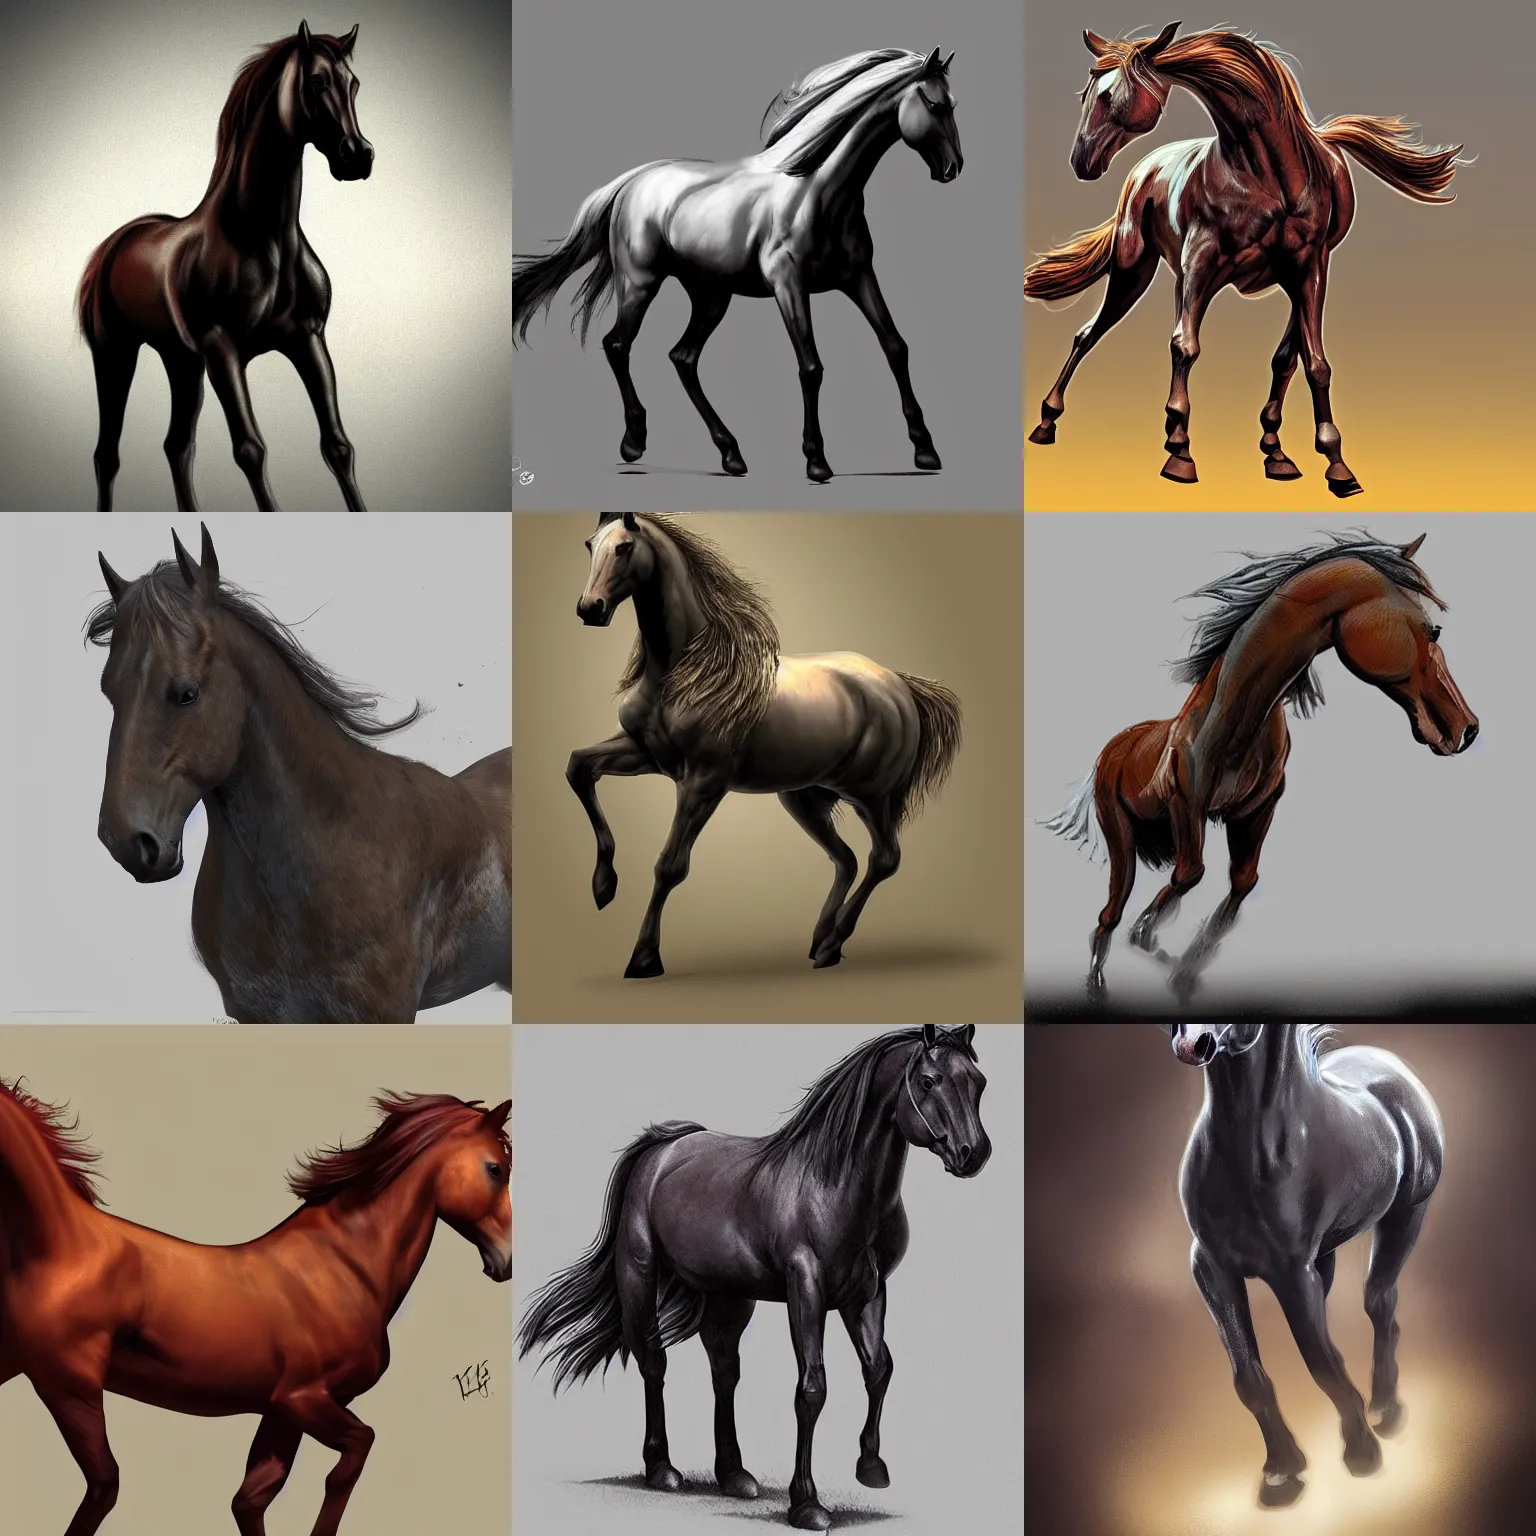 Prompt: a horse with six legs, concept art, digital art, artstation